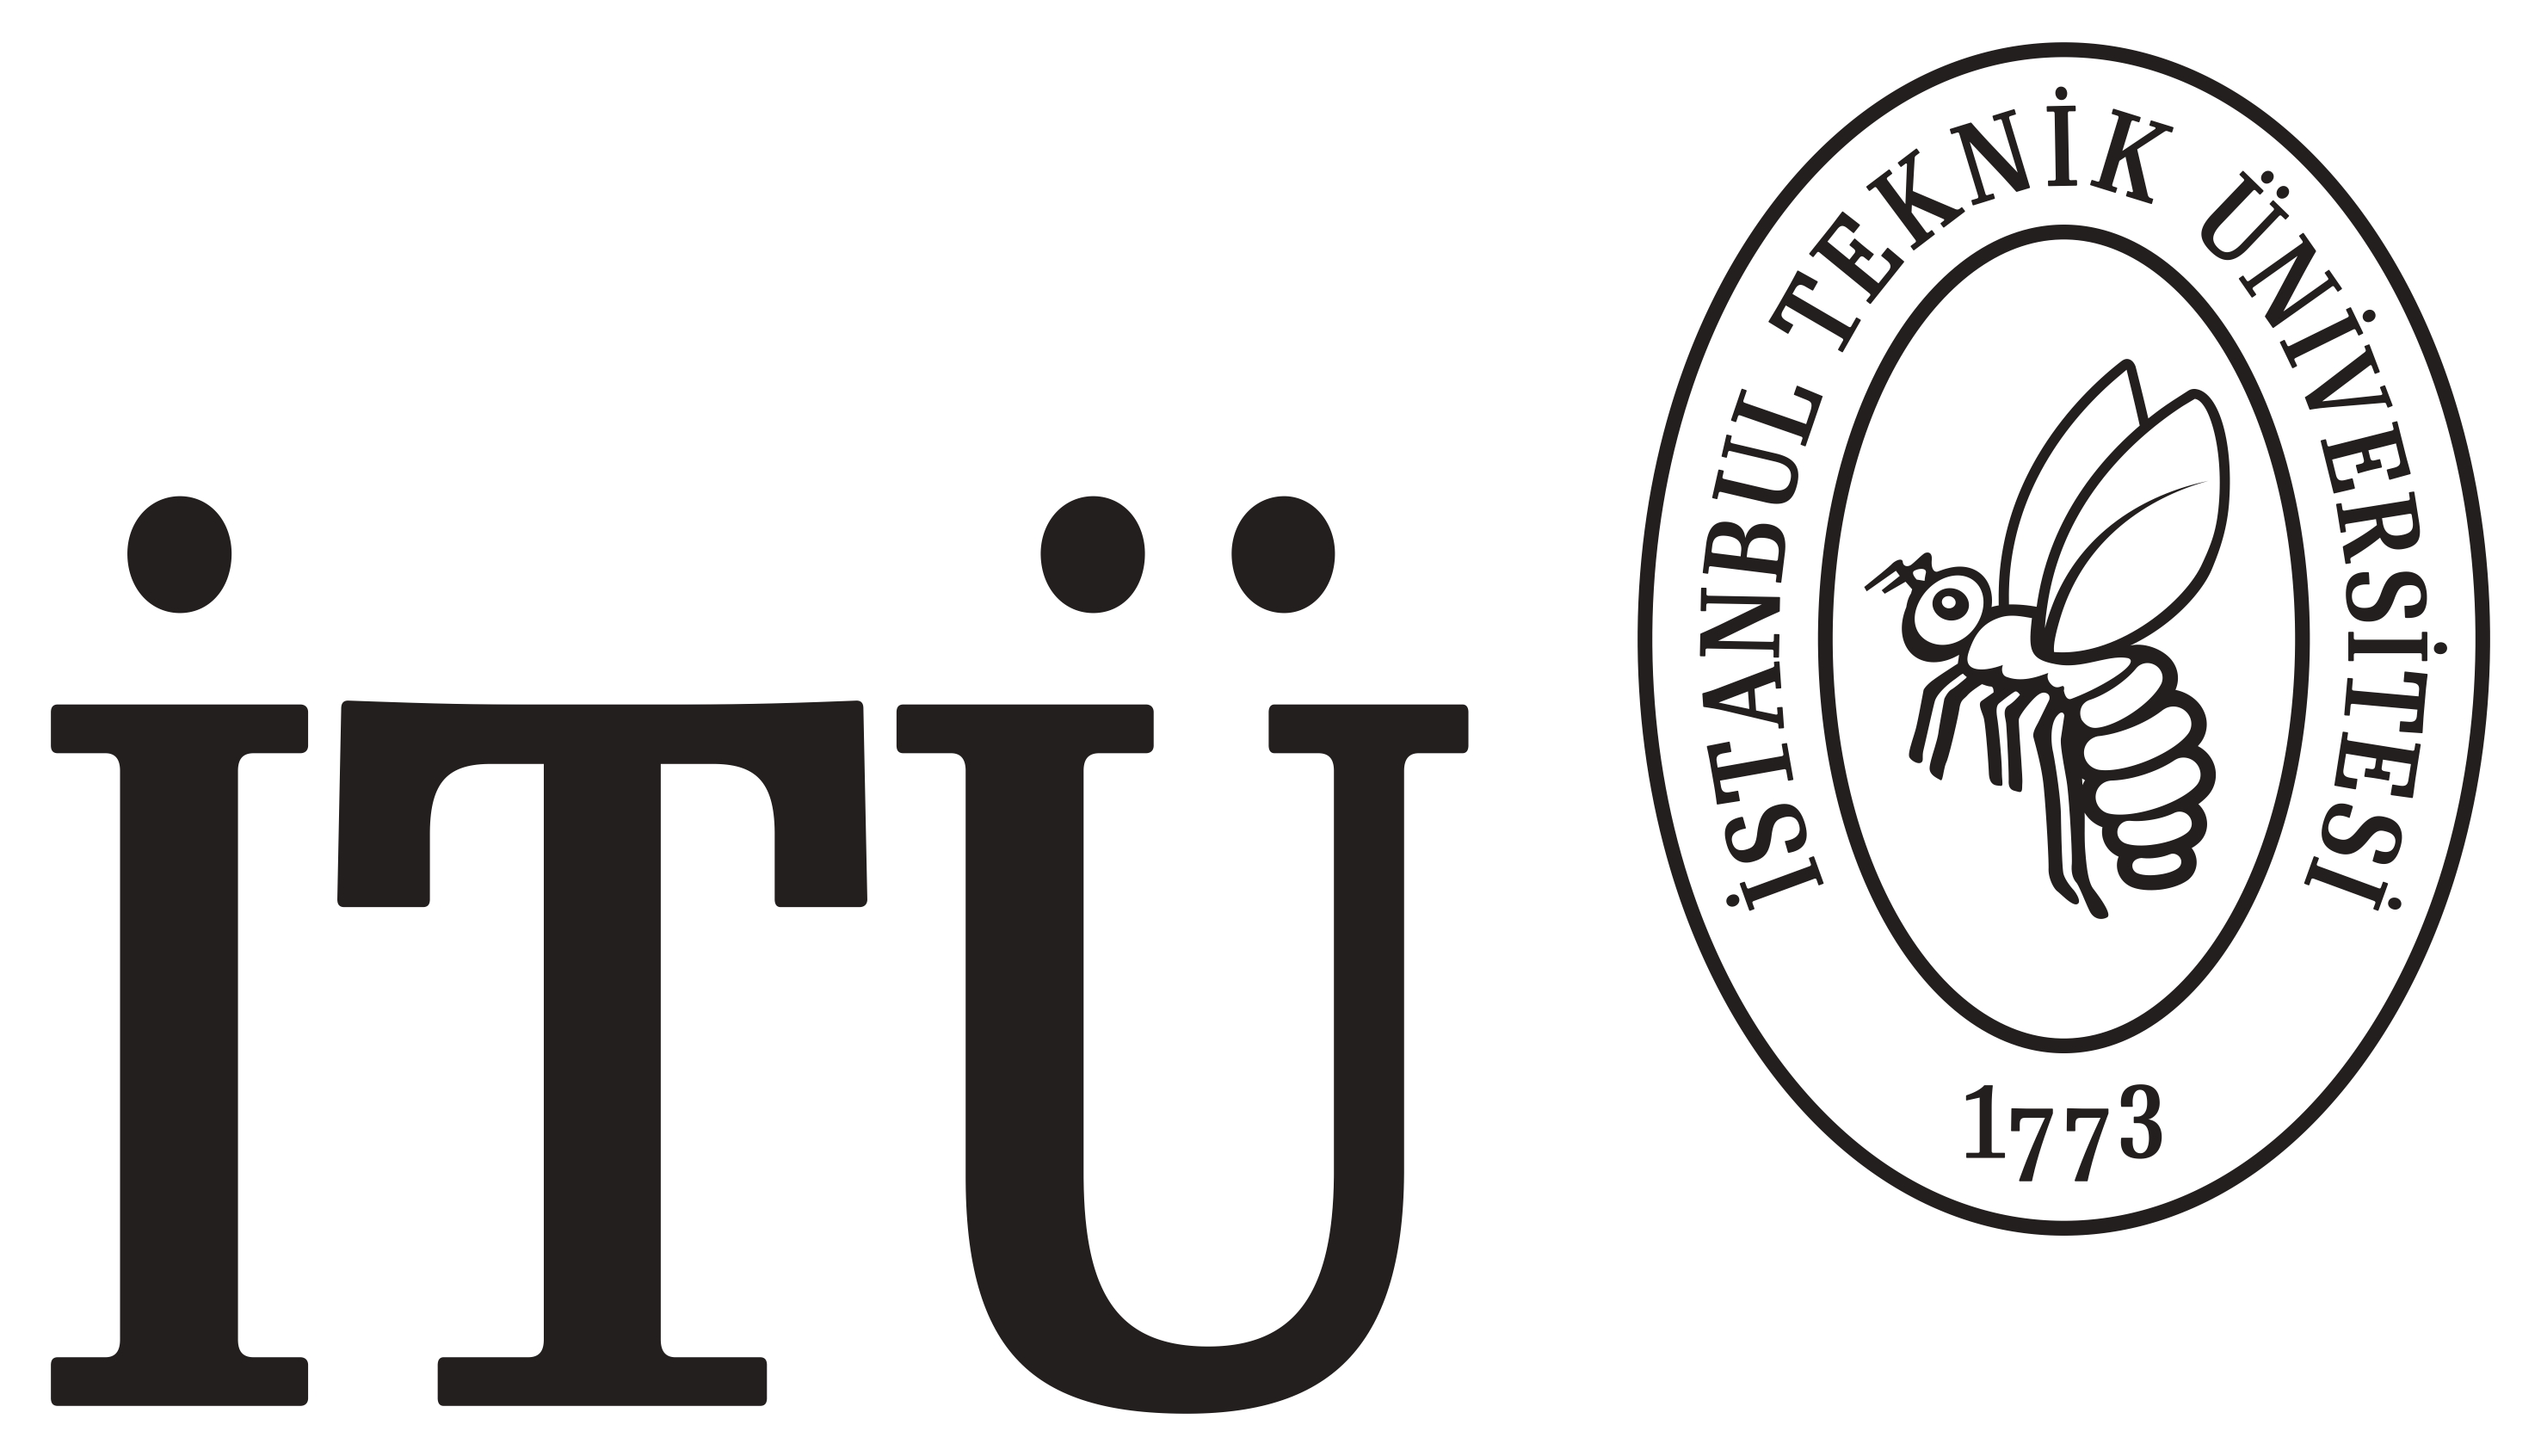 İTÜ Logo